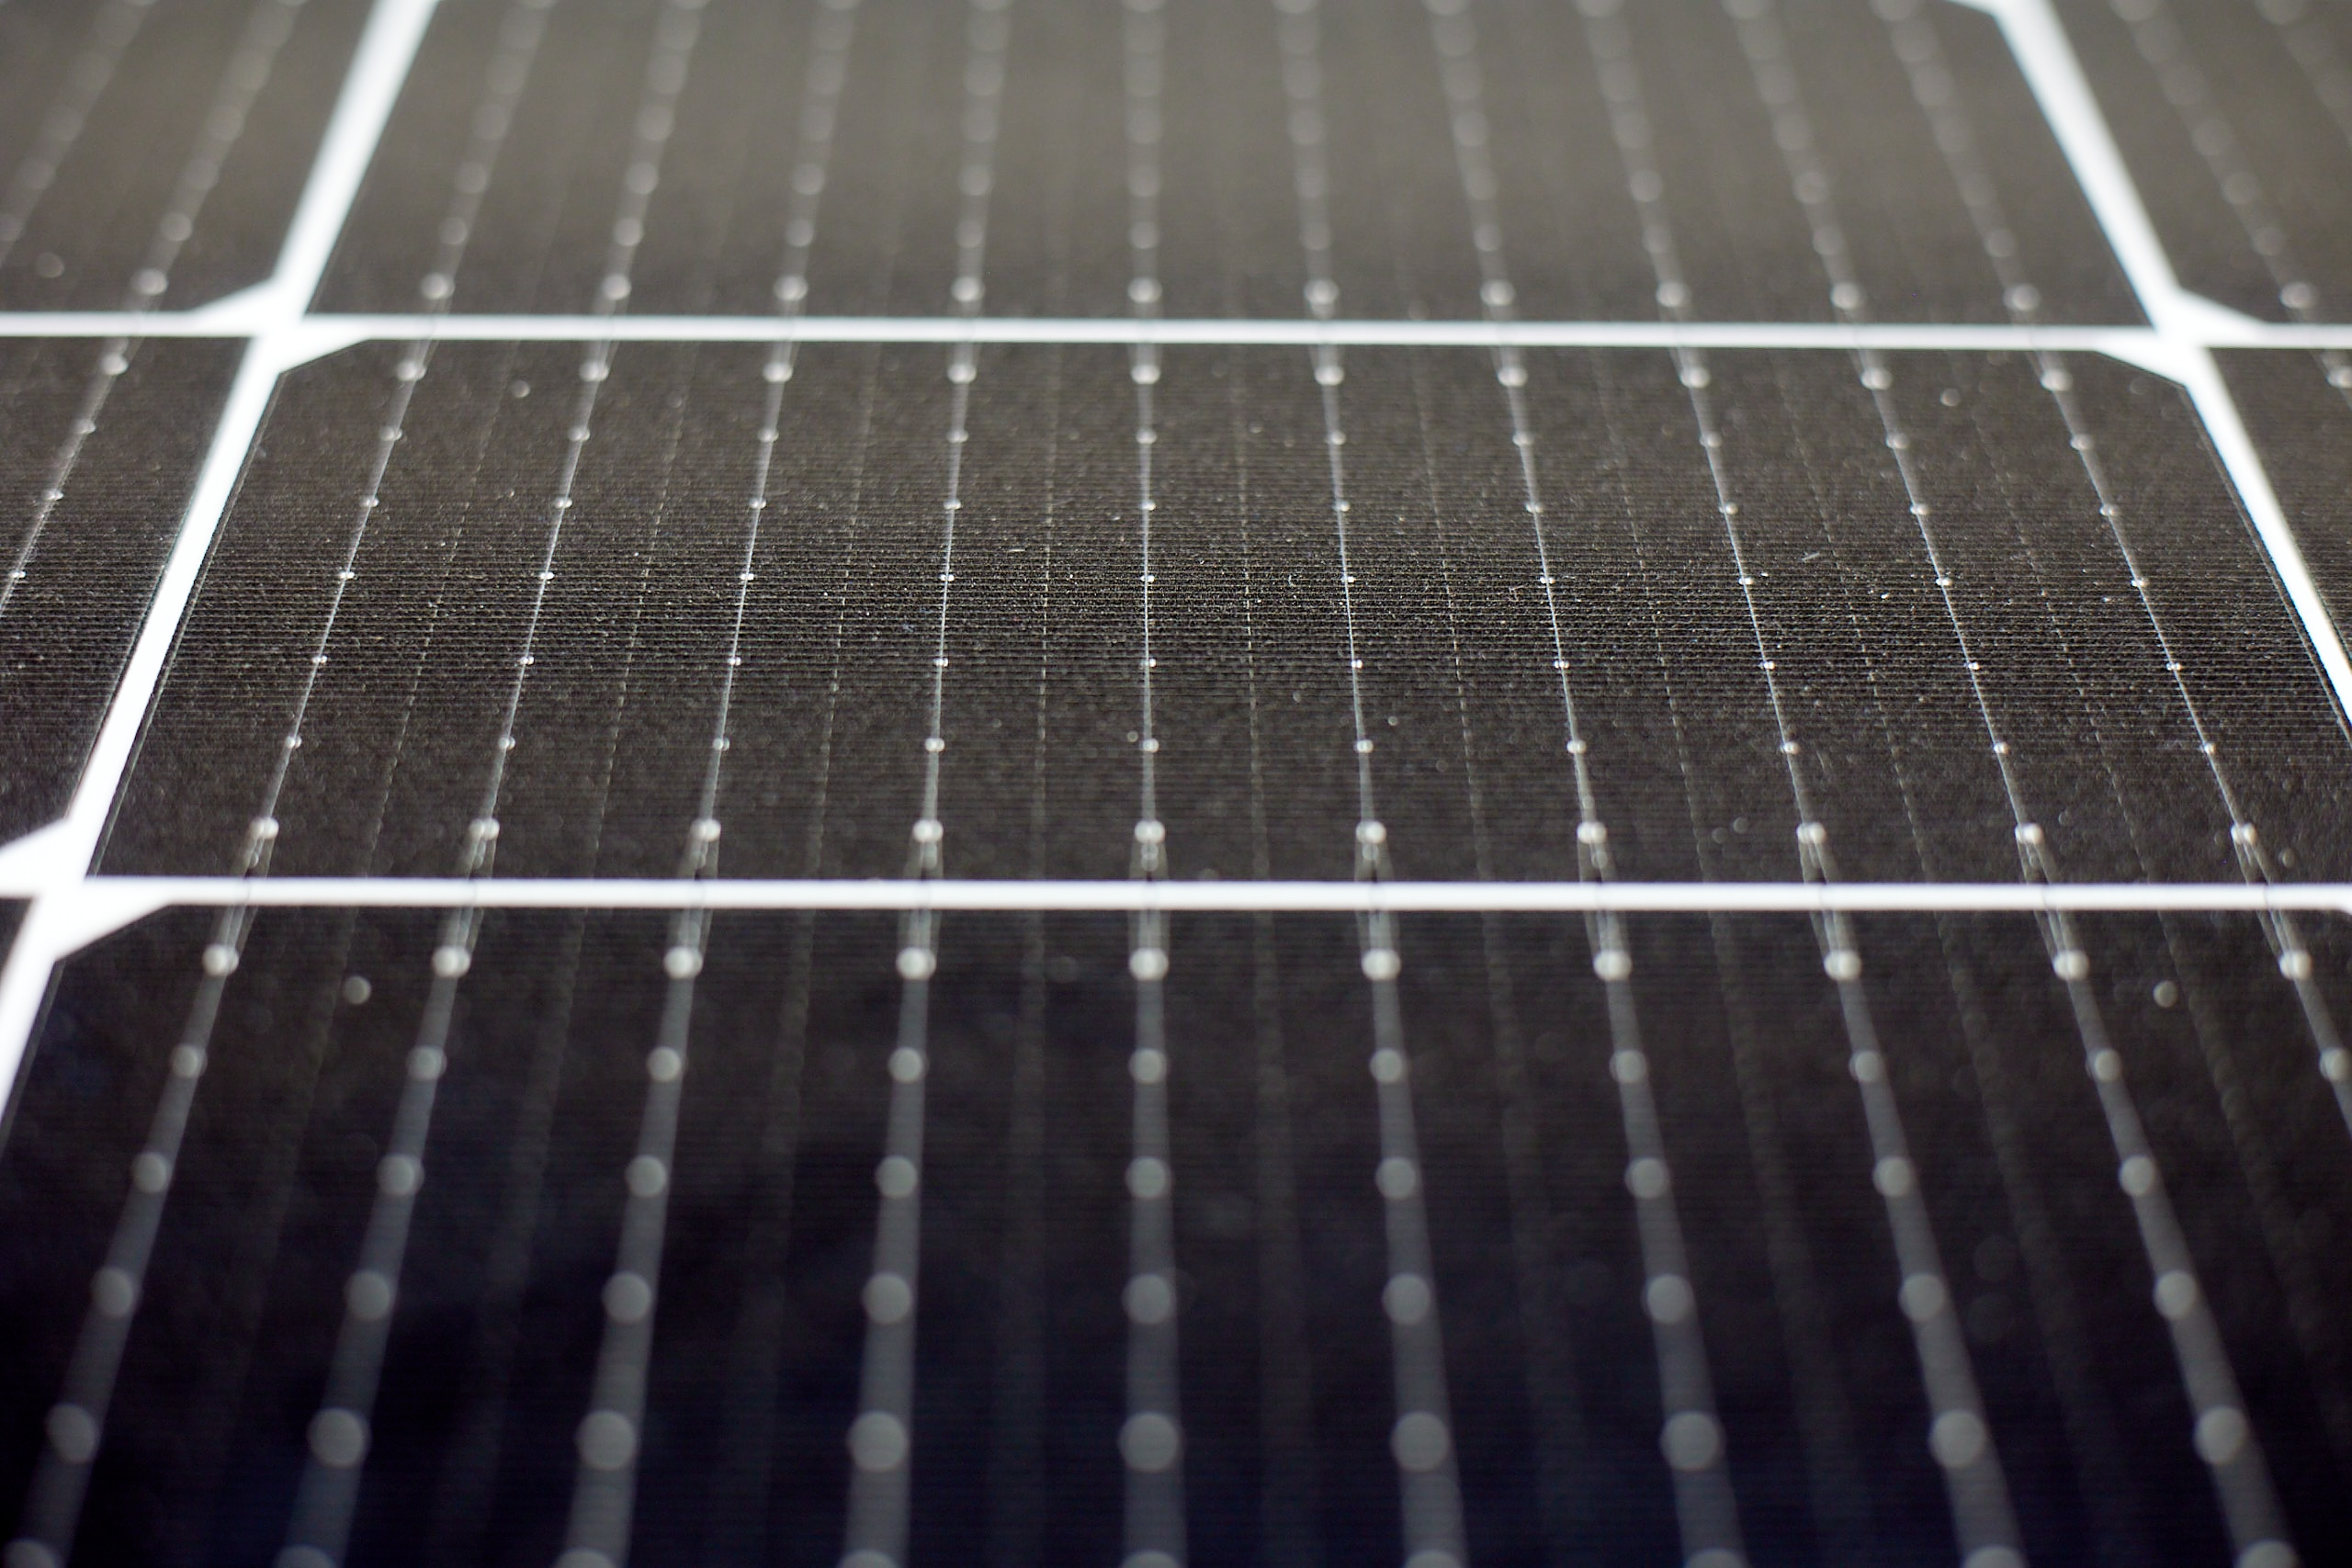 Solarzellen für saubere Energie